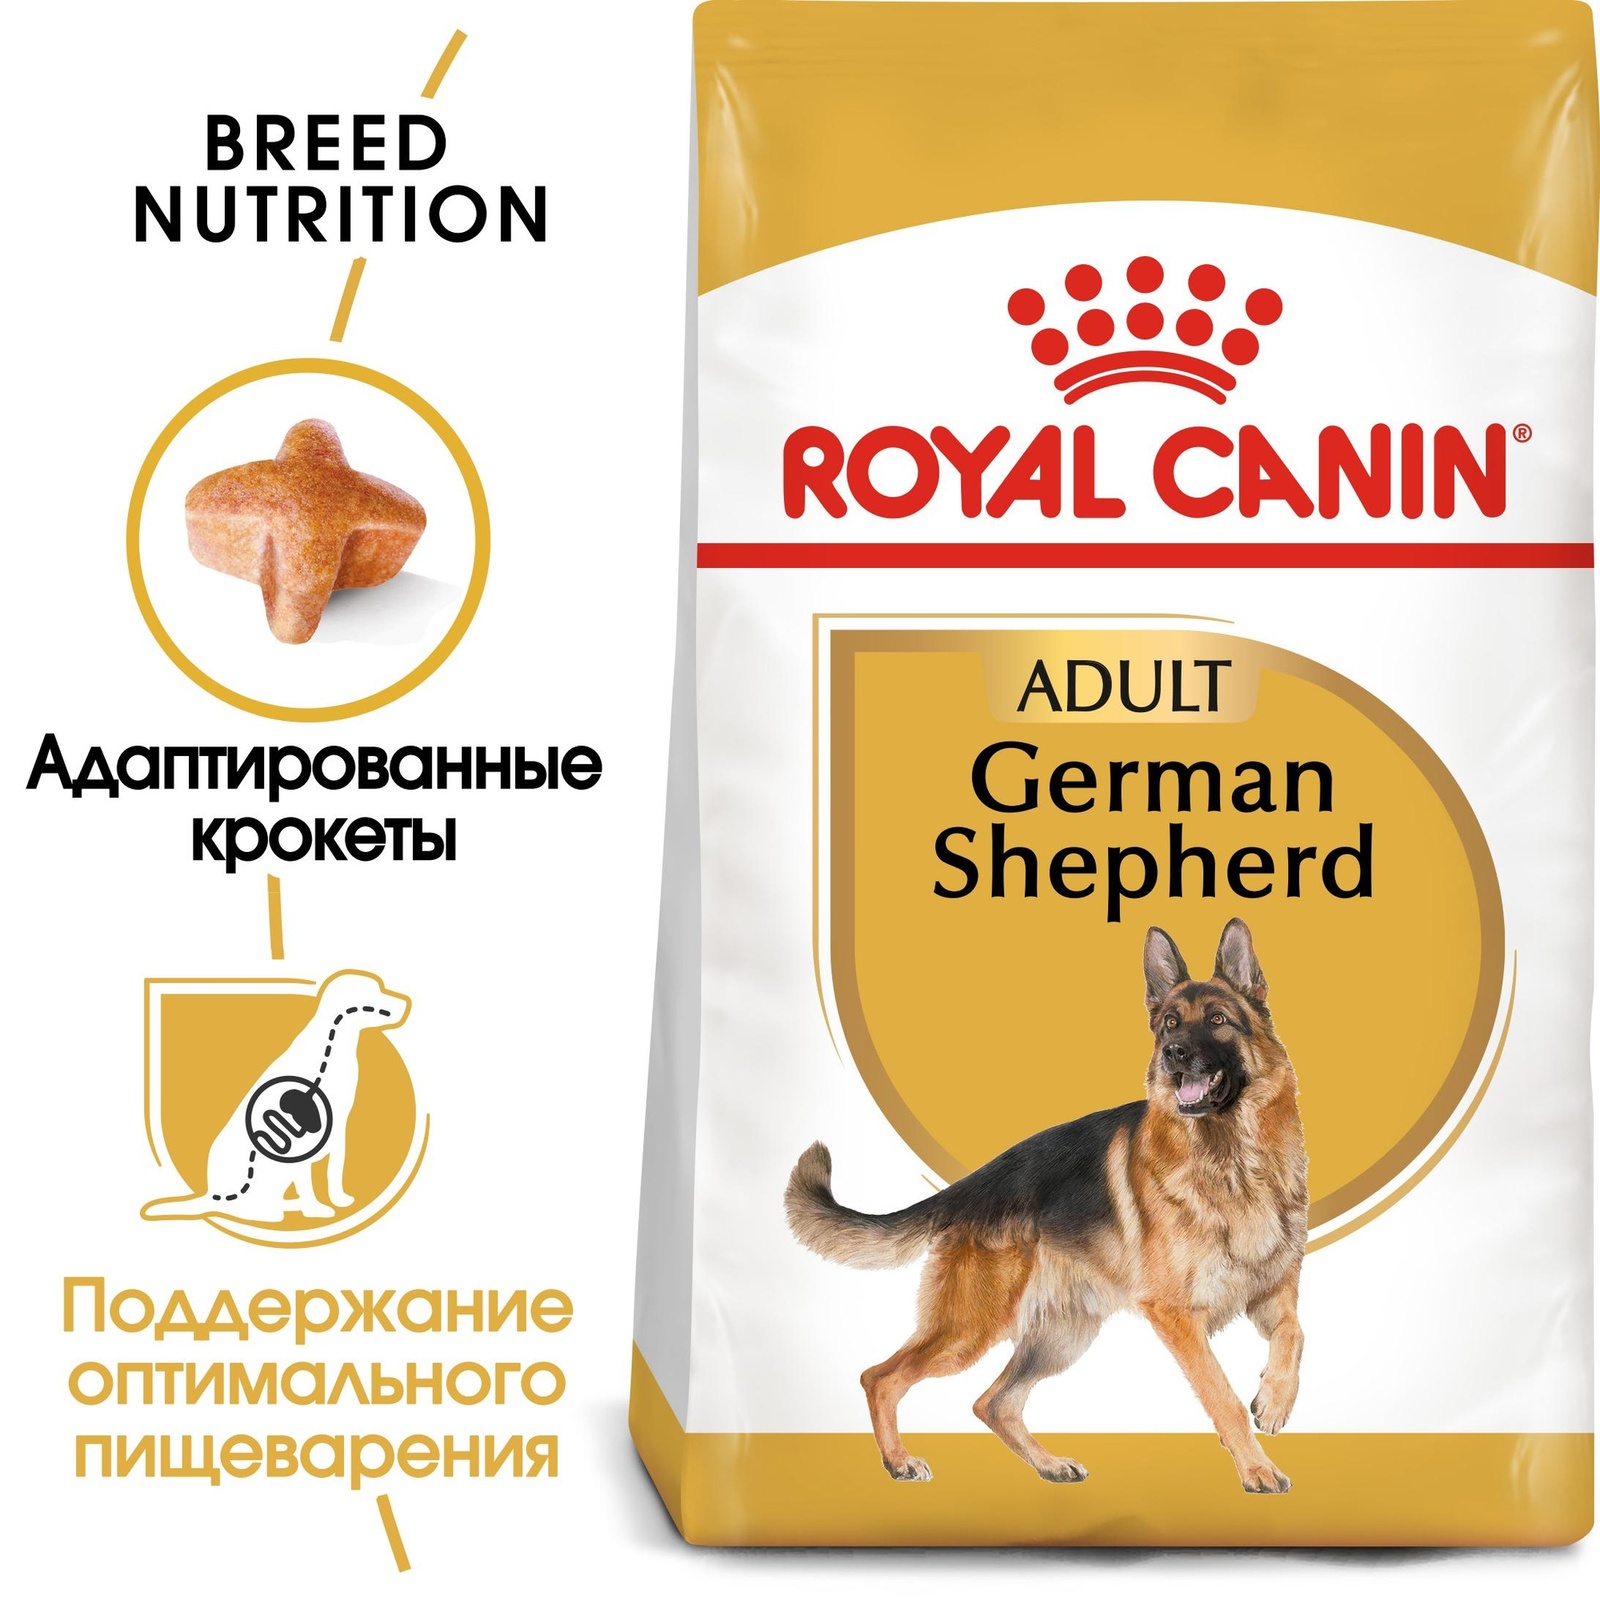 Для взрослой немецкой овчарки с 15 мес. (11 кг) Royal Canin (сухие корма) Для взрослой немецкой овчарки с 15 мес. (11 кг) - фото 2